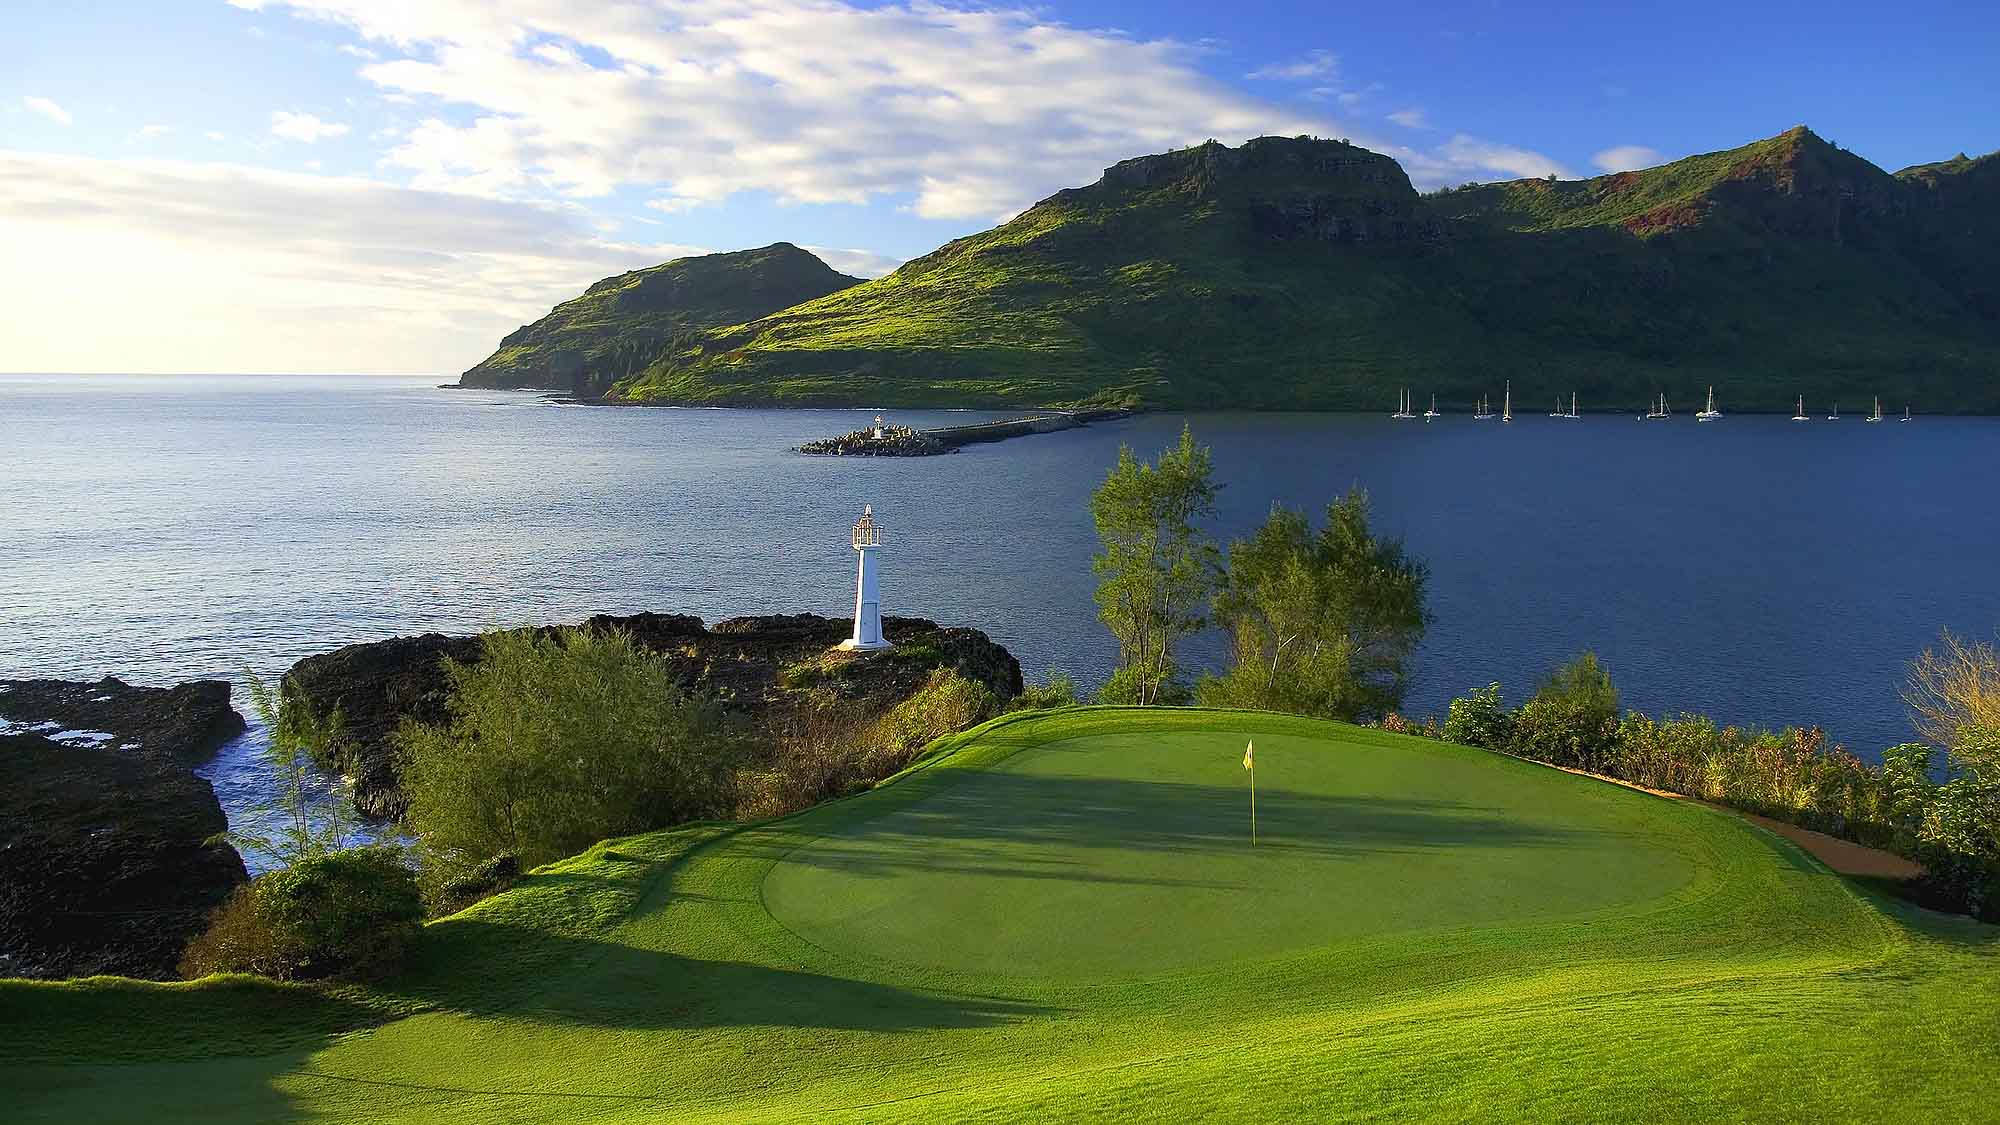 New Kauai Golf Course Opens at Hokuala